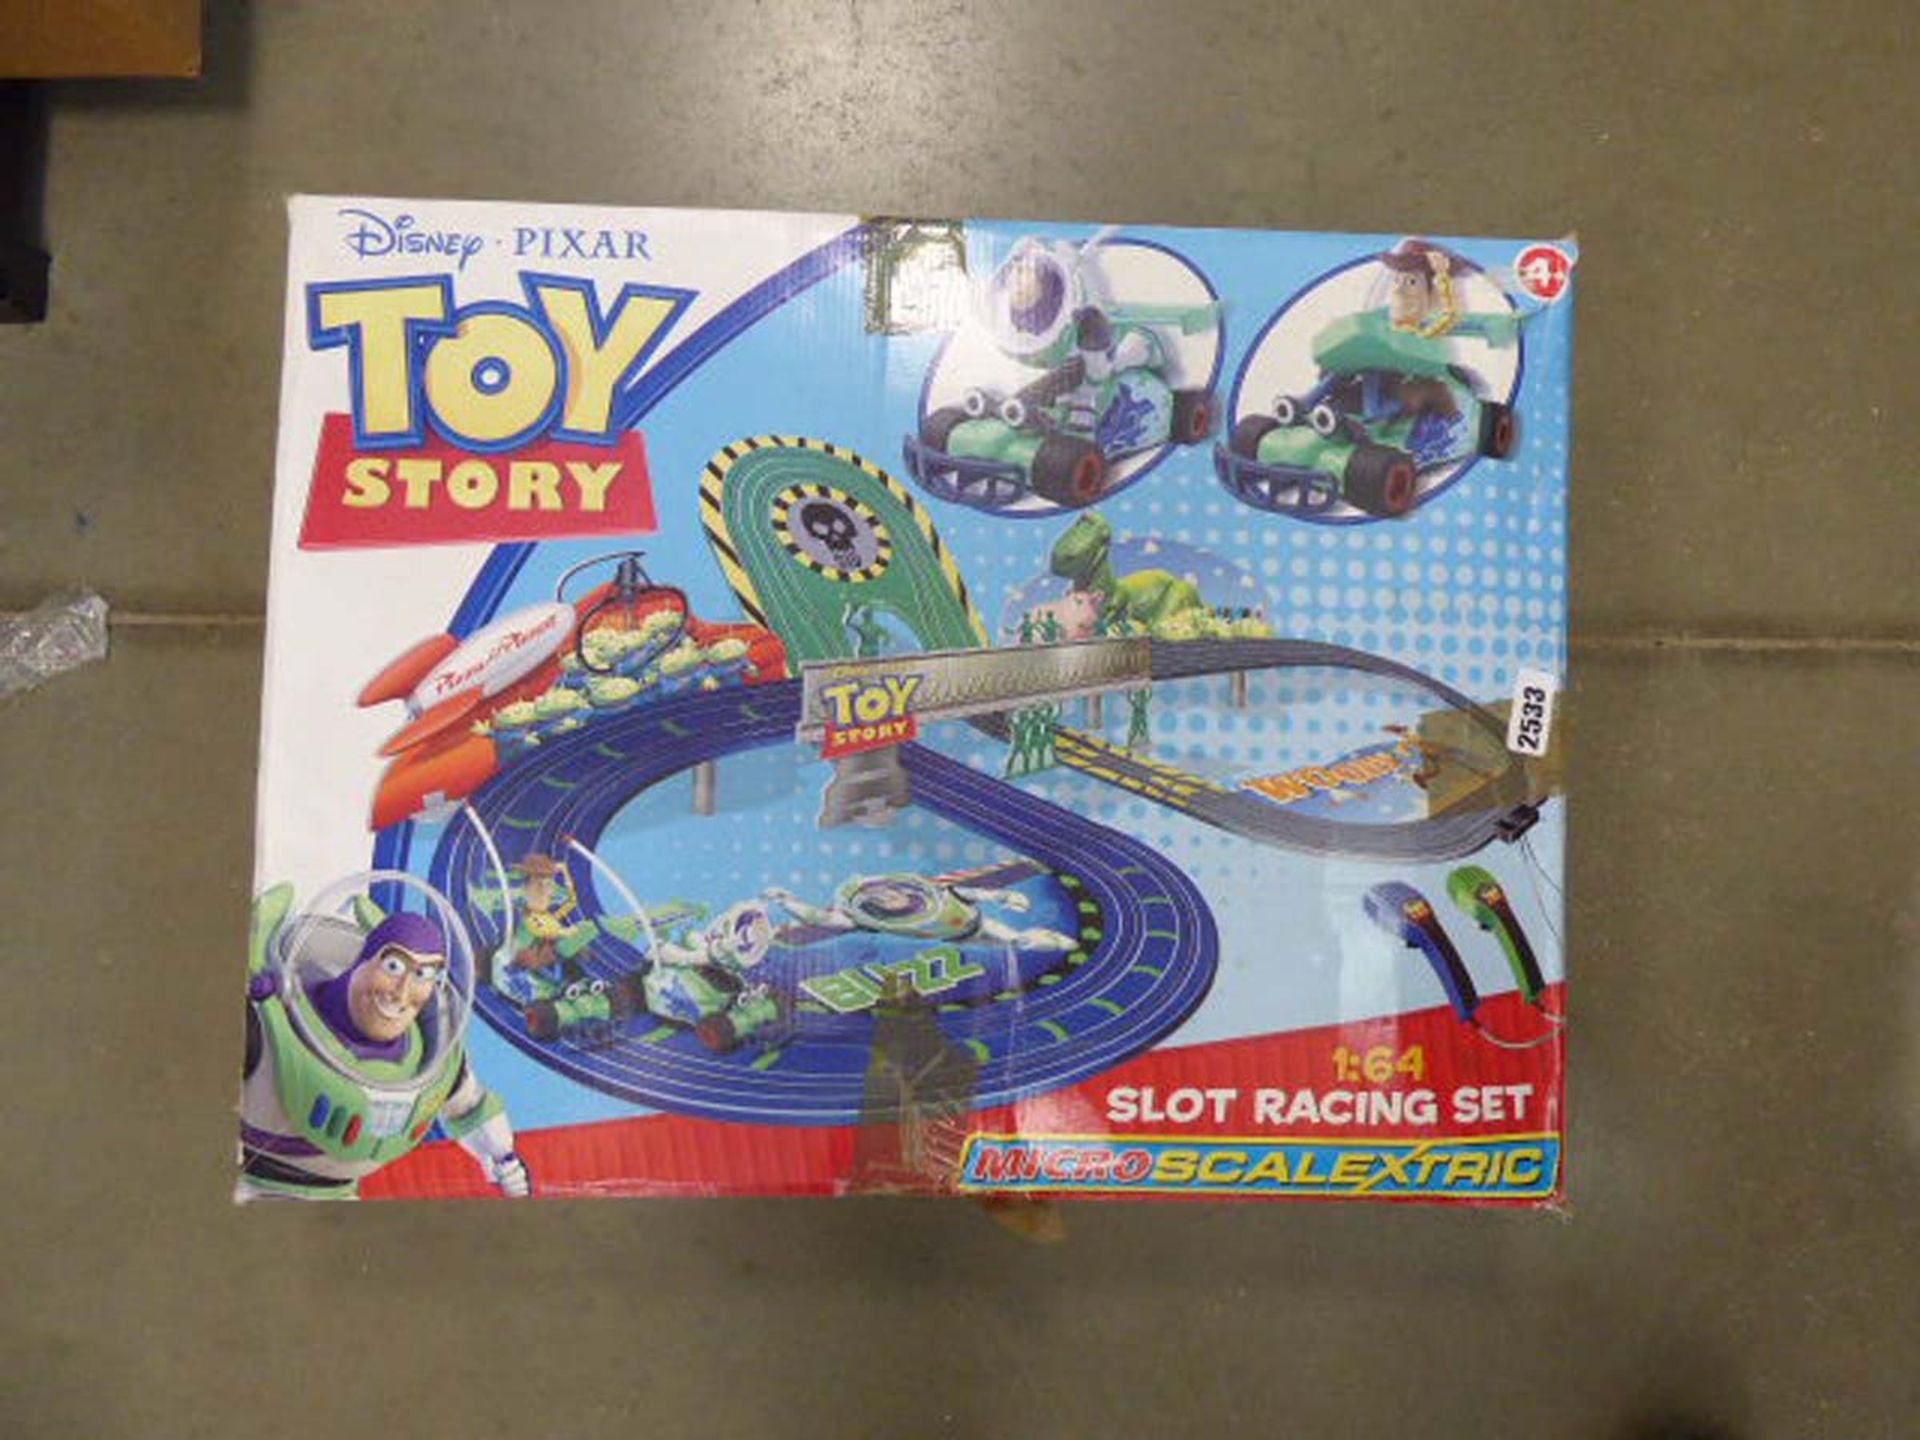 Toy Story Scalextric set